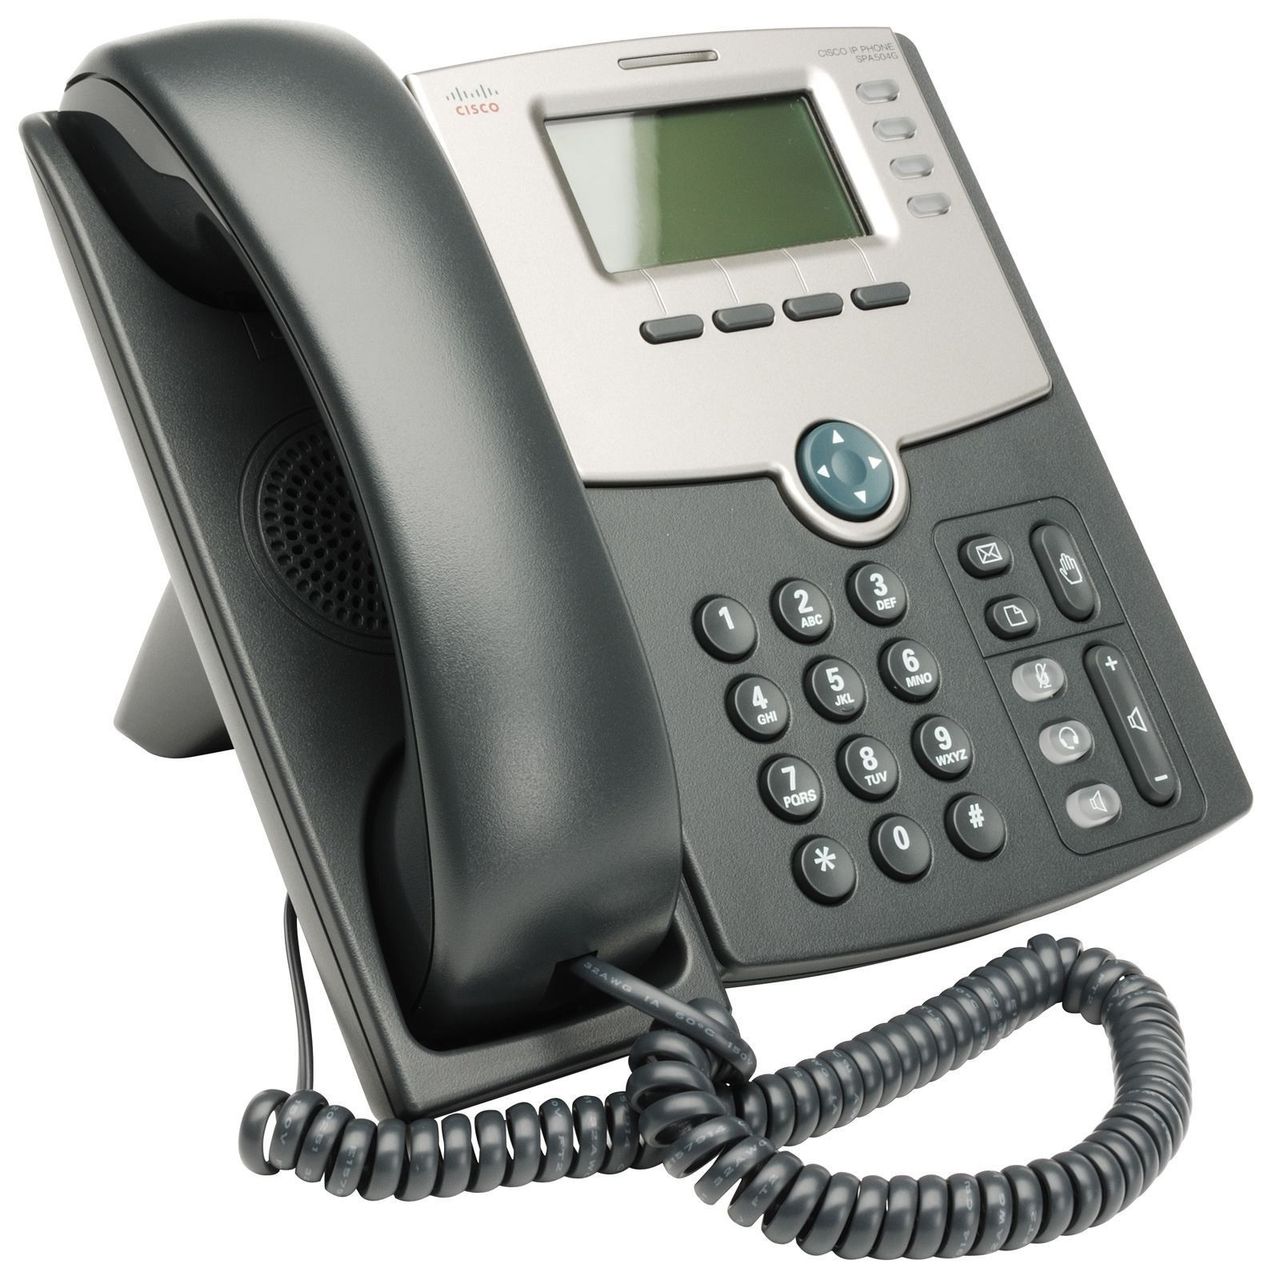 Ip телефон шлюз. VOIP телефон Cisco spa502g. IP телефон Cisco spa504g. Телефон Cisco spa509g. VOIP-телефон Cisco spa514g.